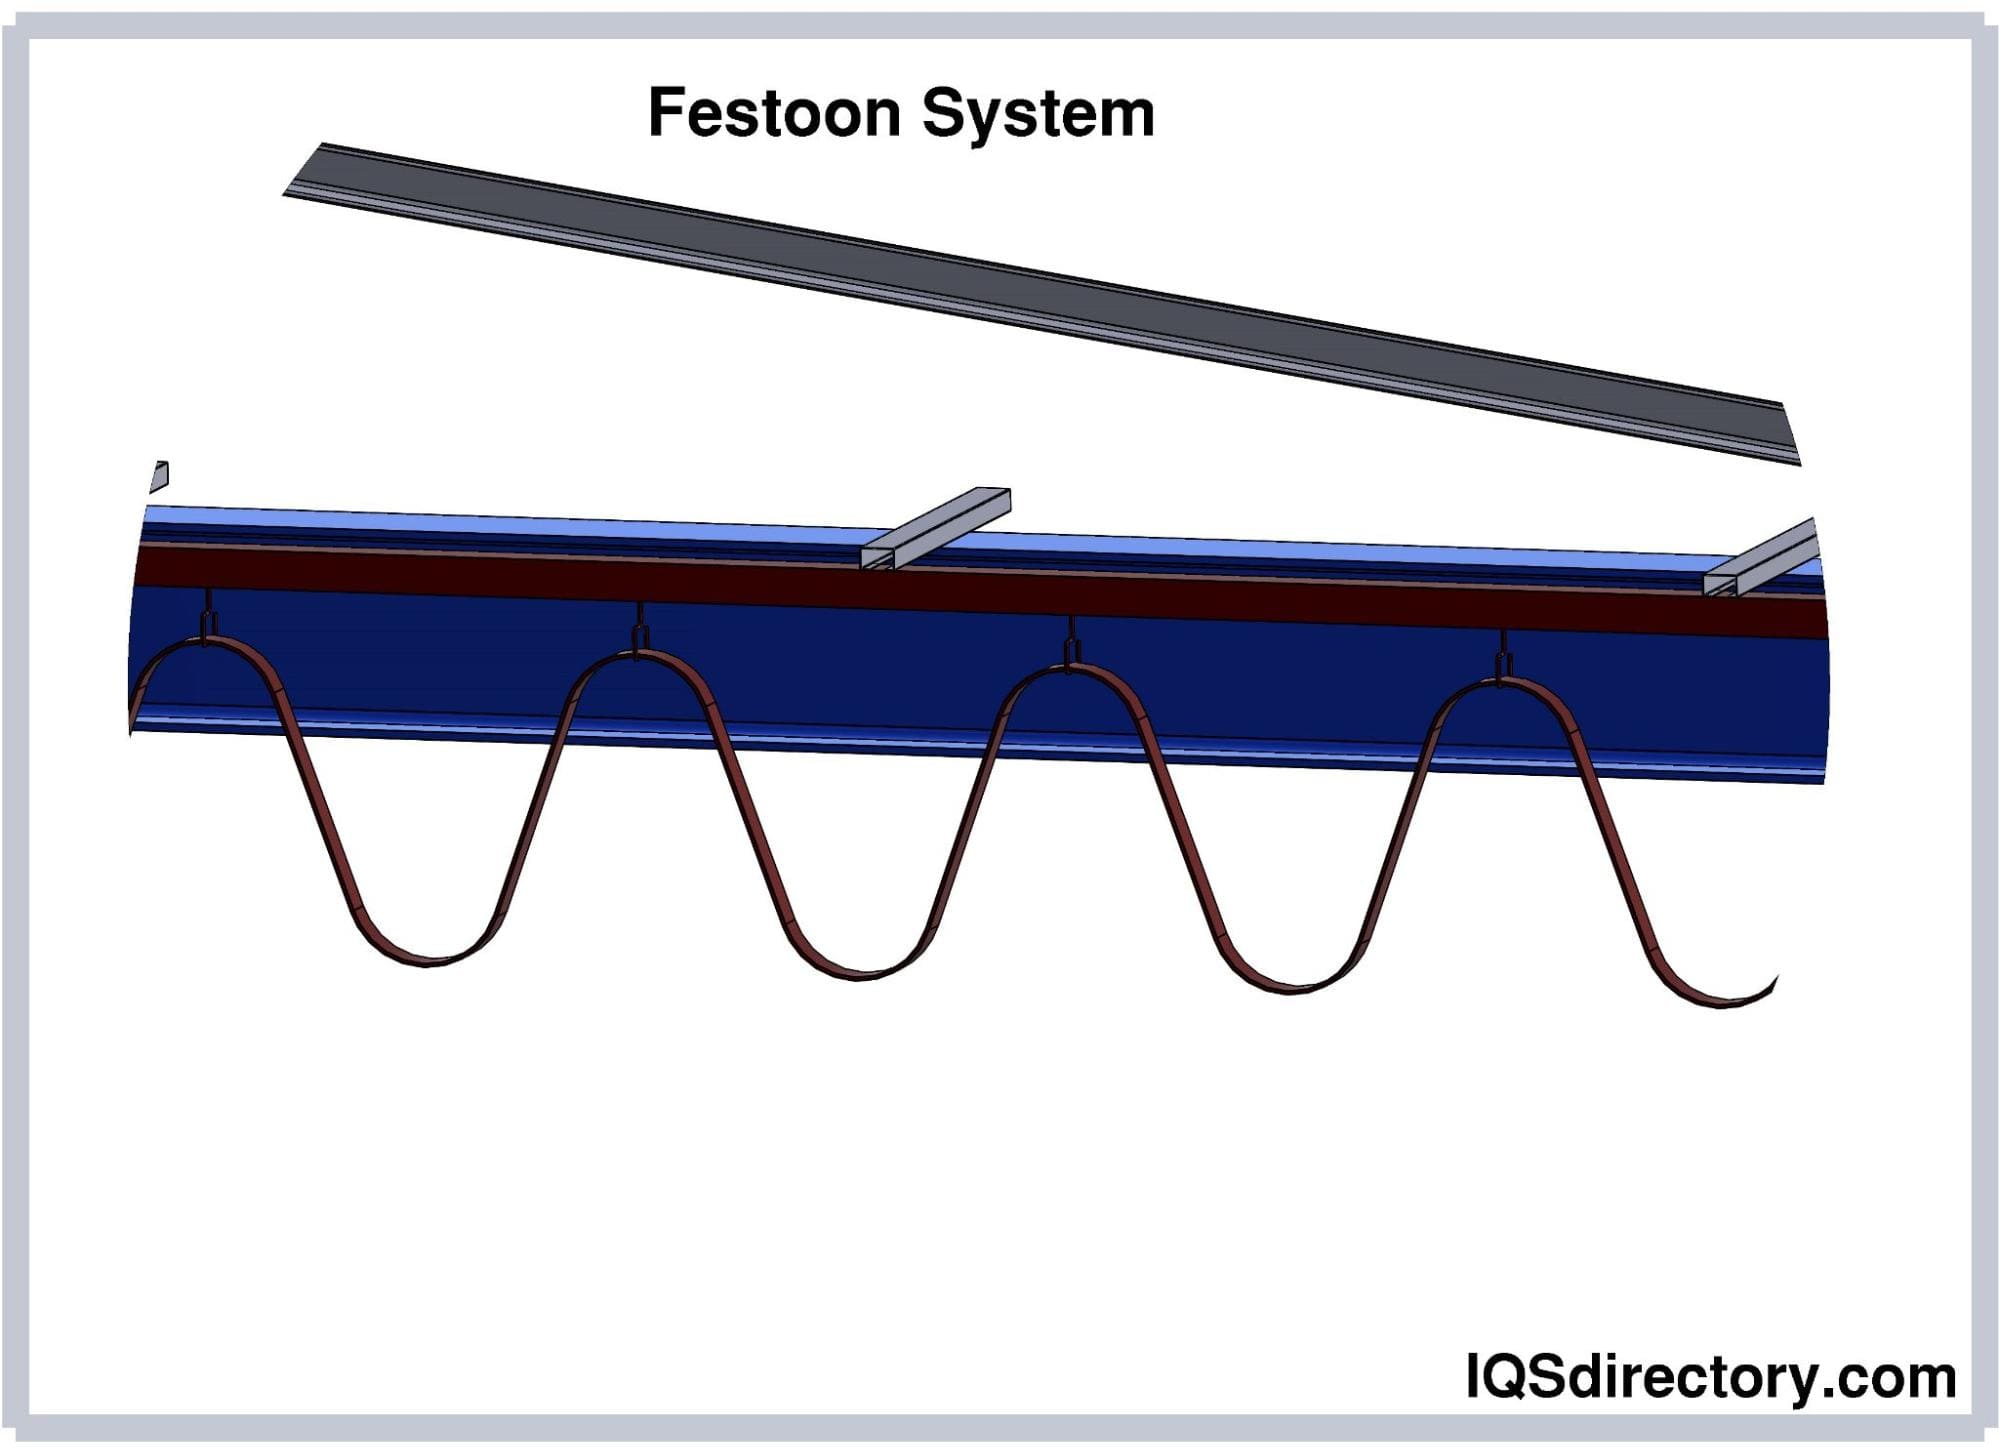 Festoon System